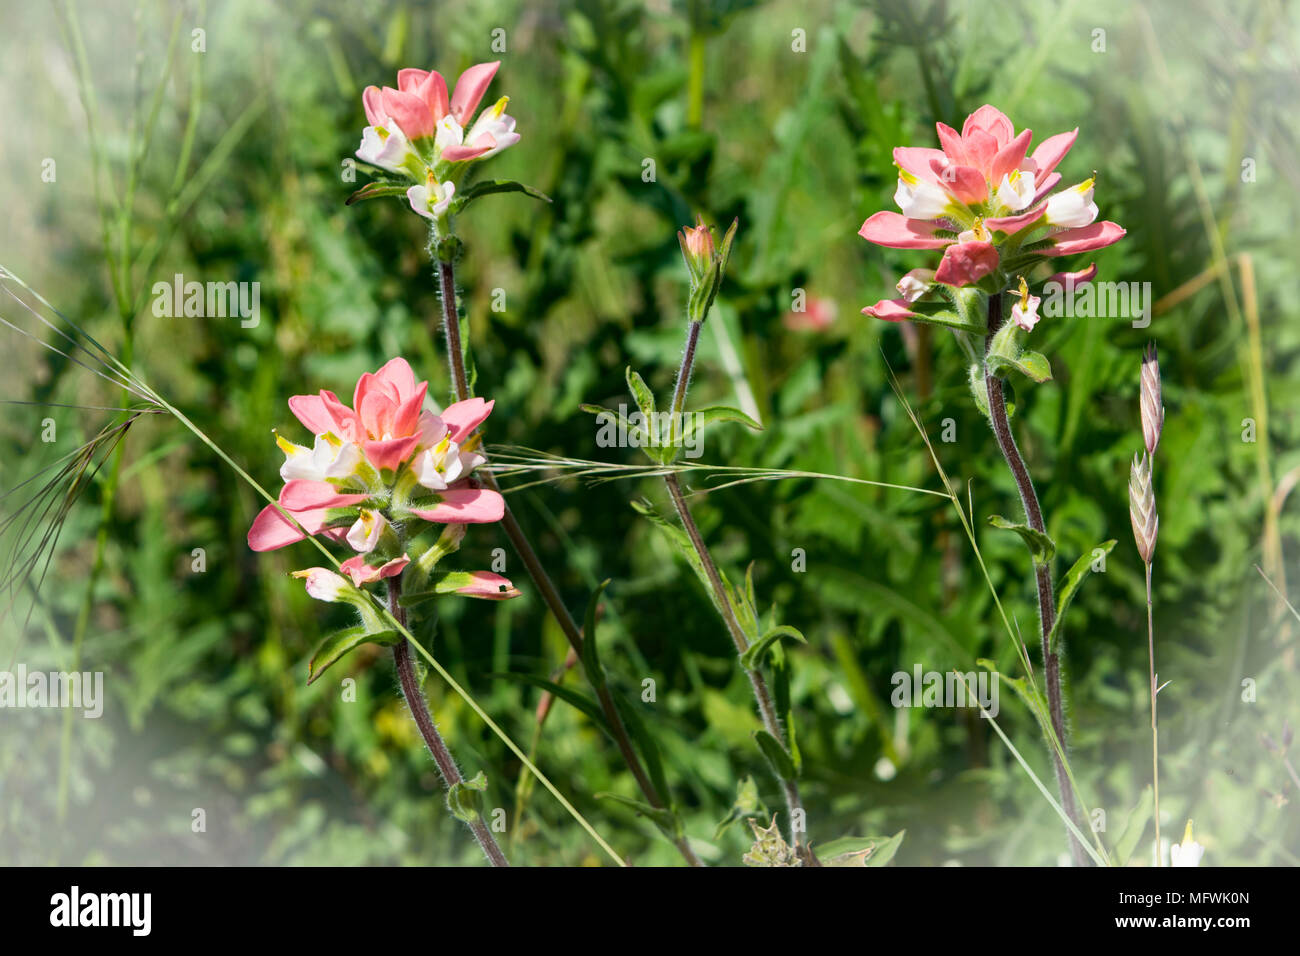 Rosa flores silvestres que atraen a las mariposas. Encontrado en un jardín de mariposas/hábitat en Kerrville, Texas. Foto de stock